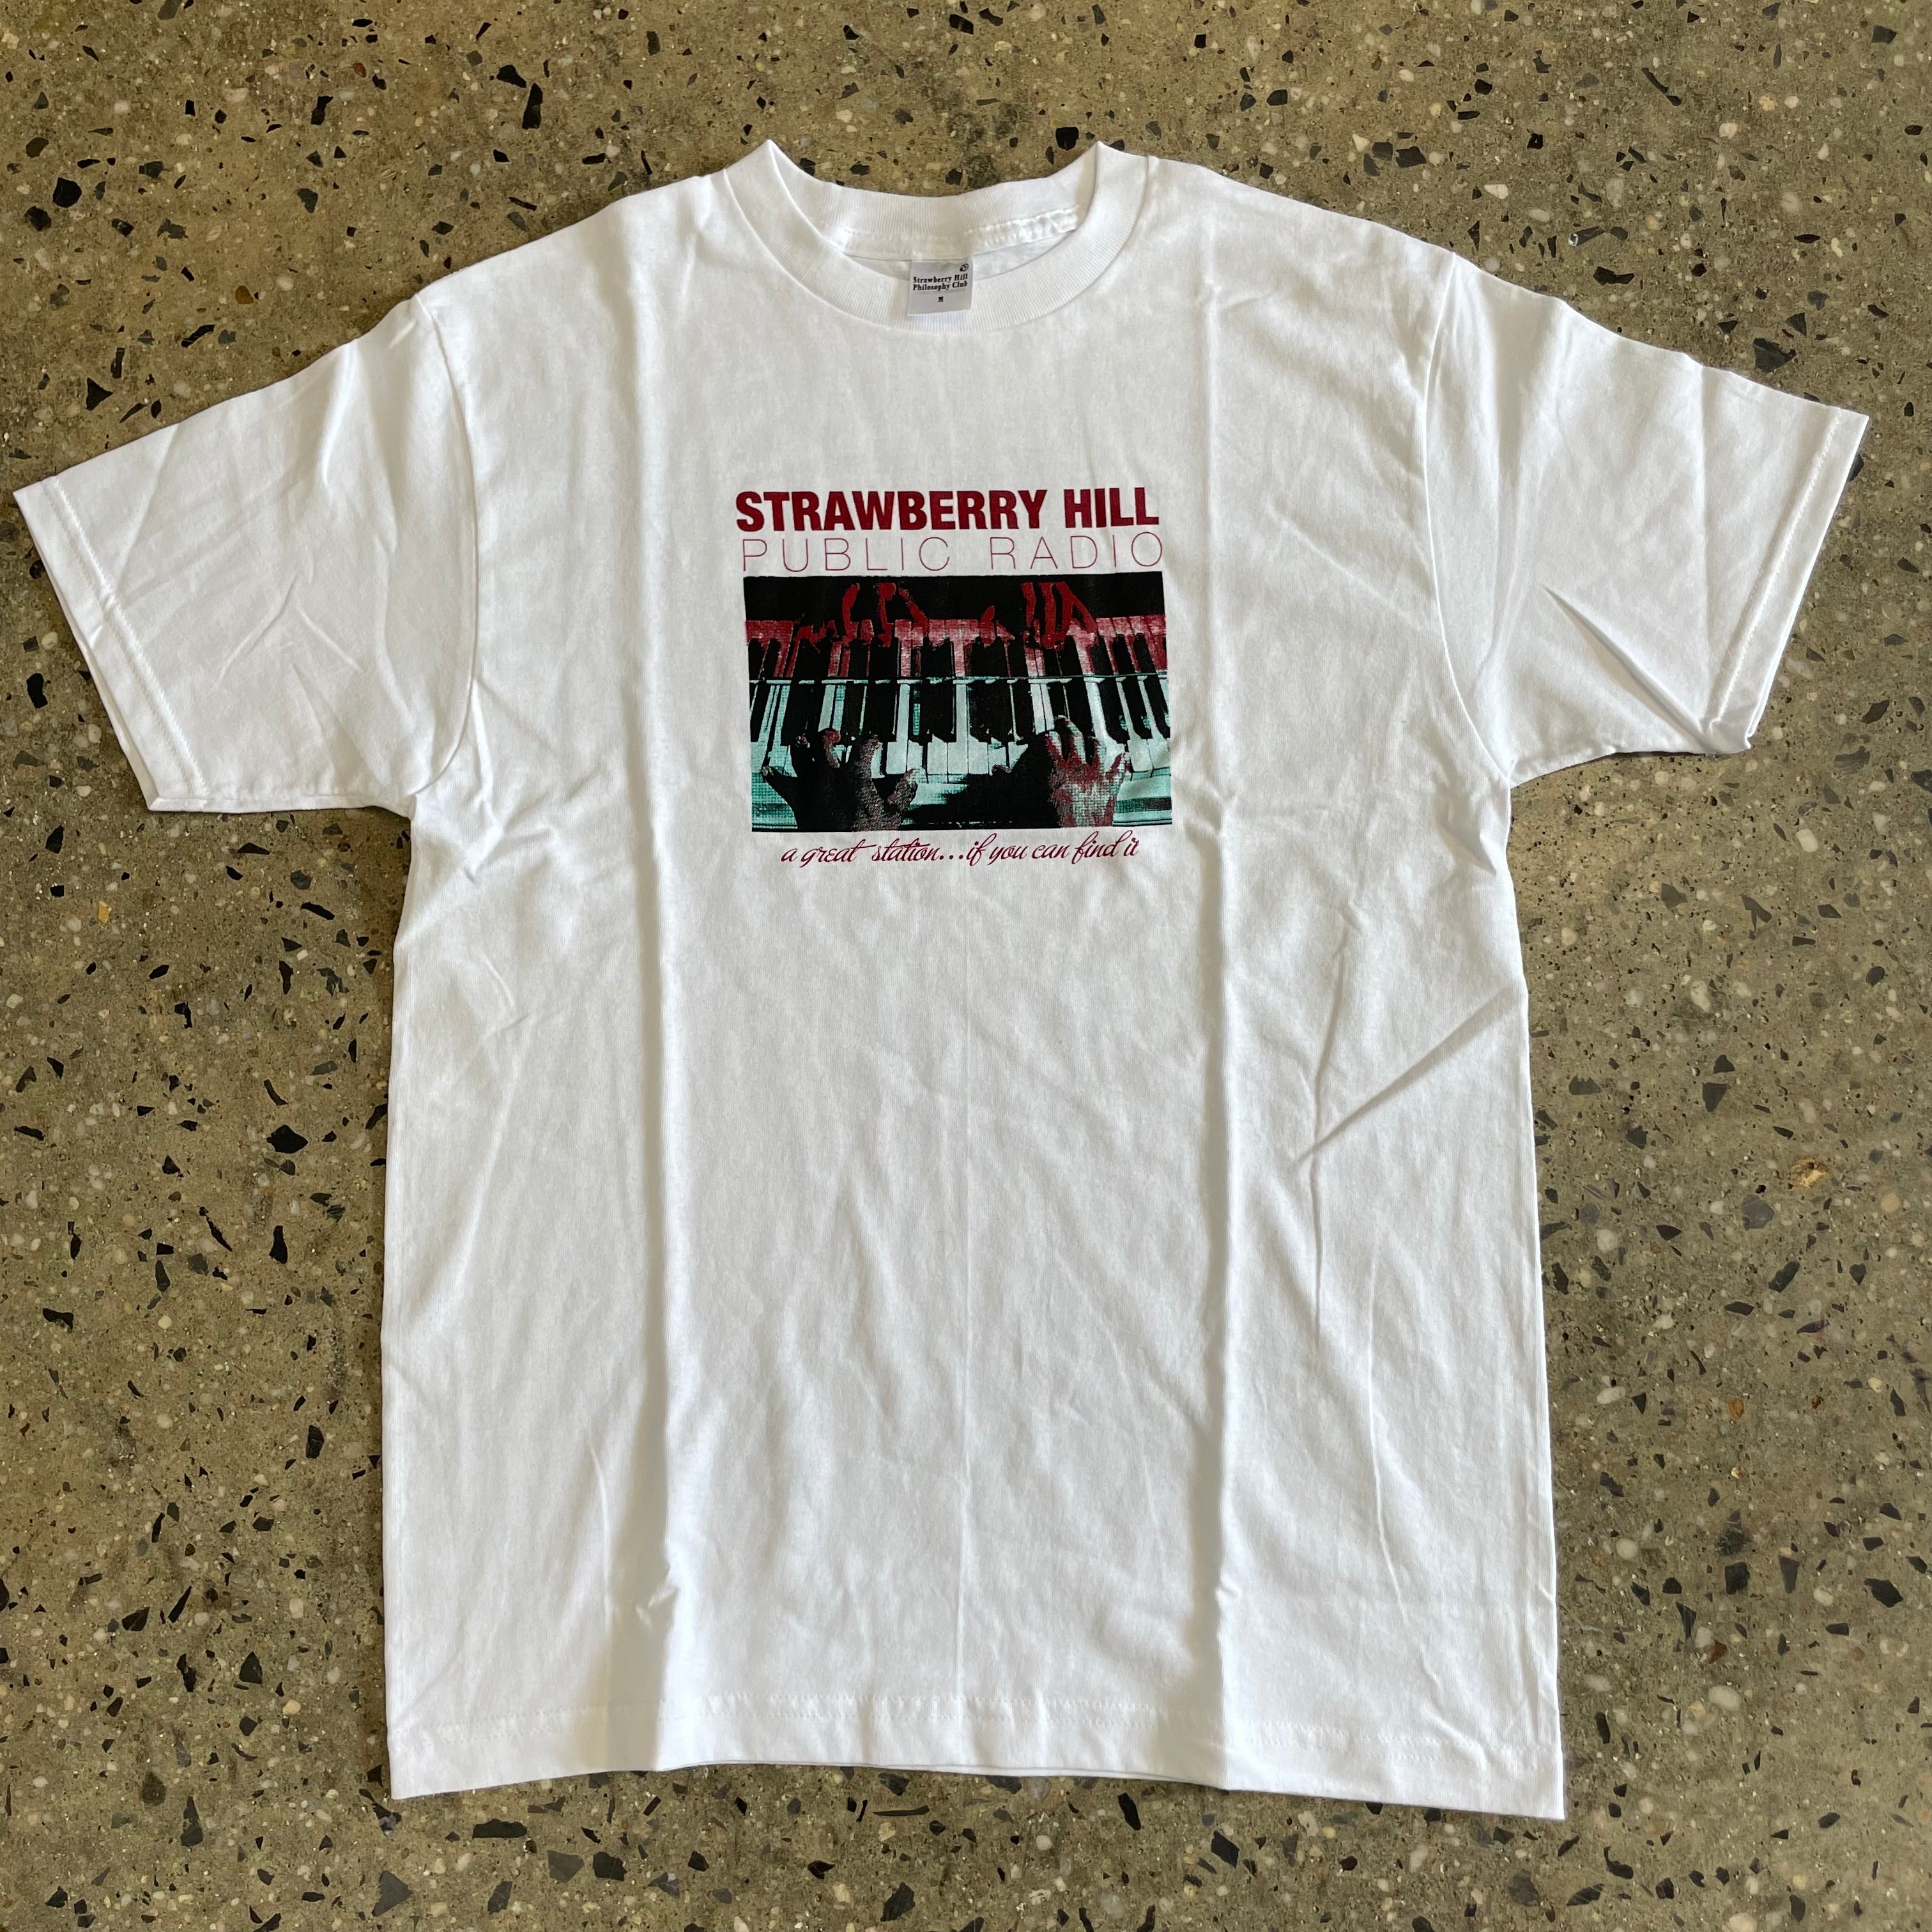 T Shirts Supreme Pas Cher - Supreme Shop